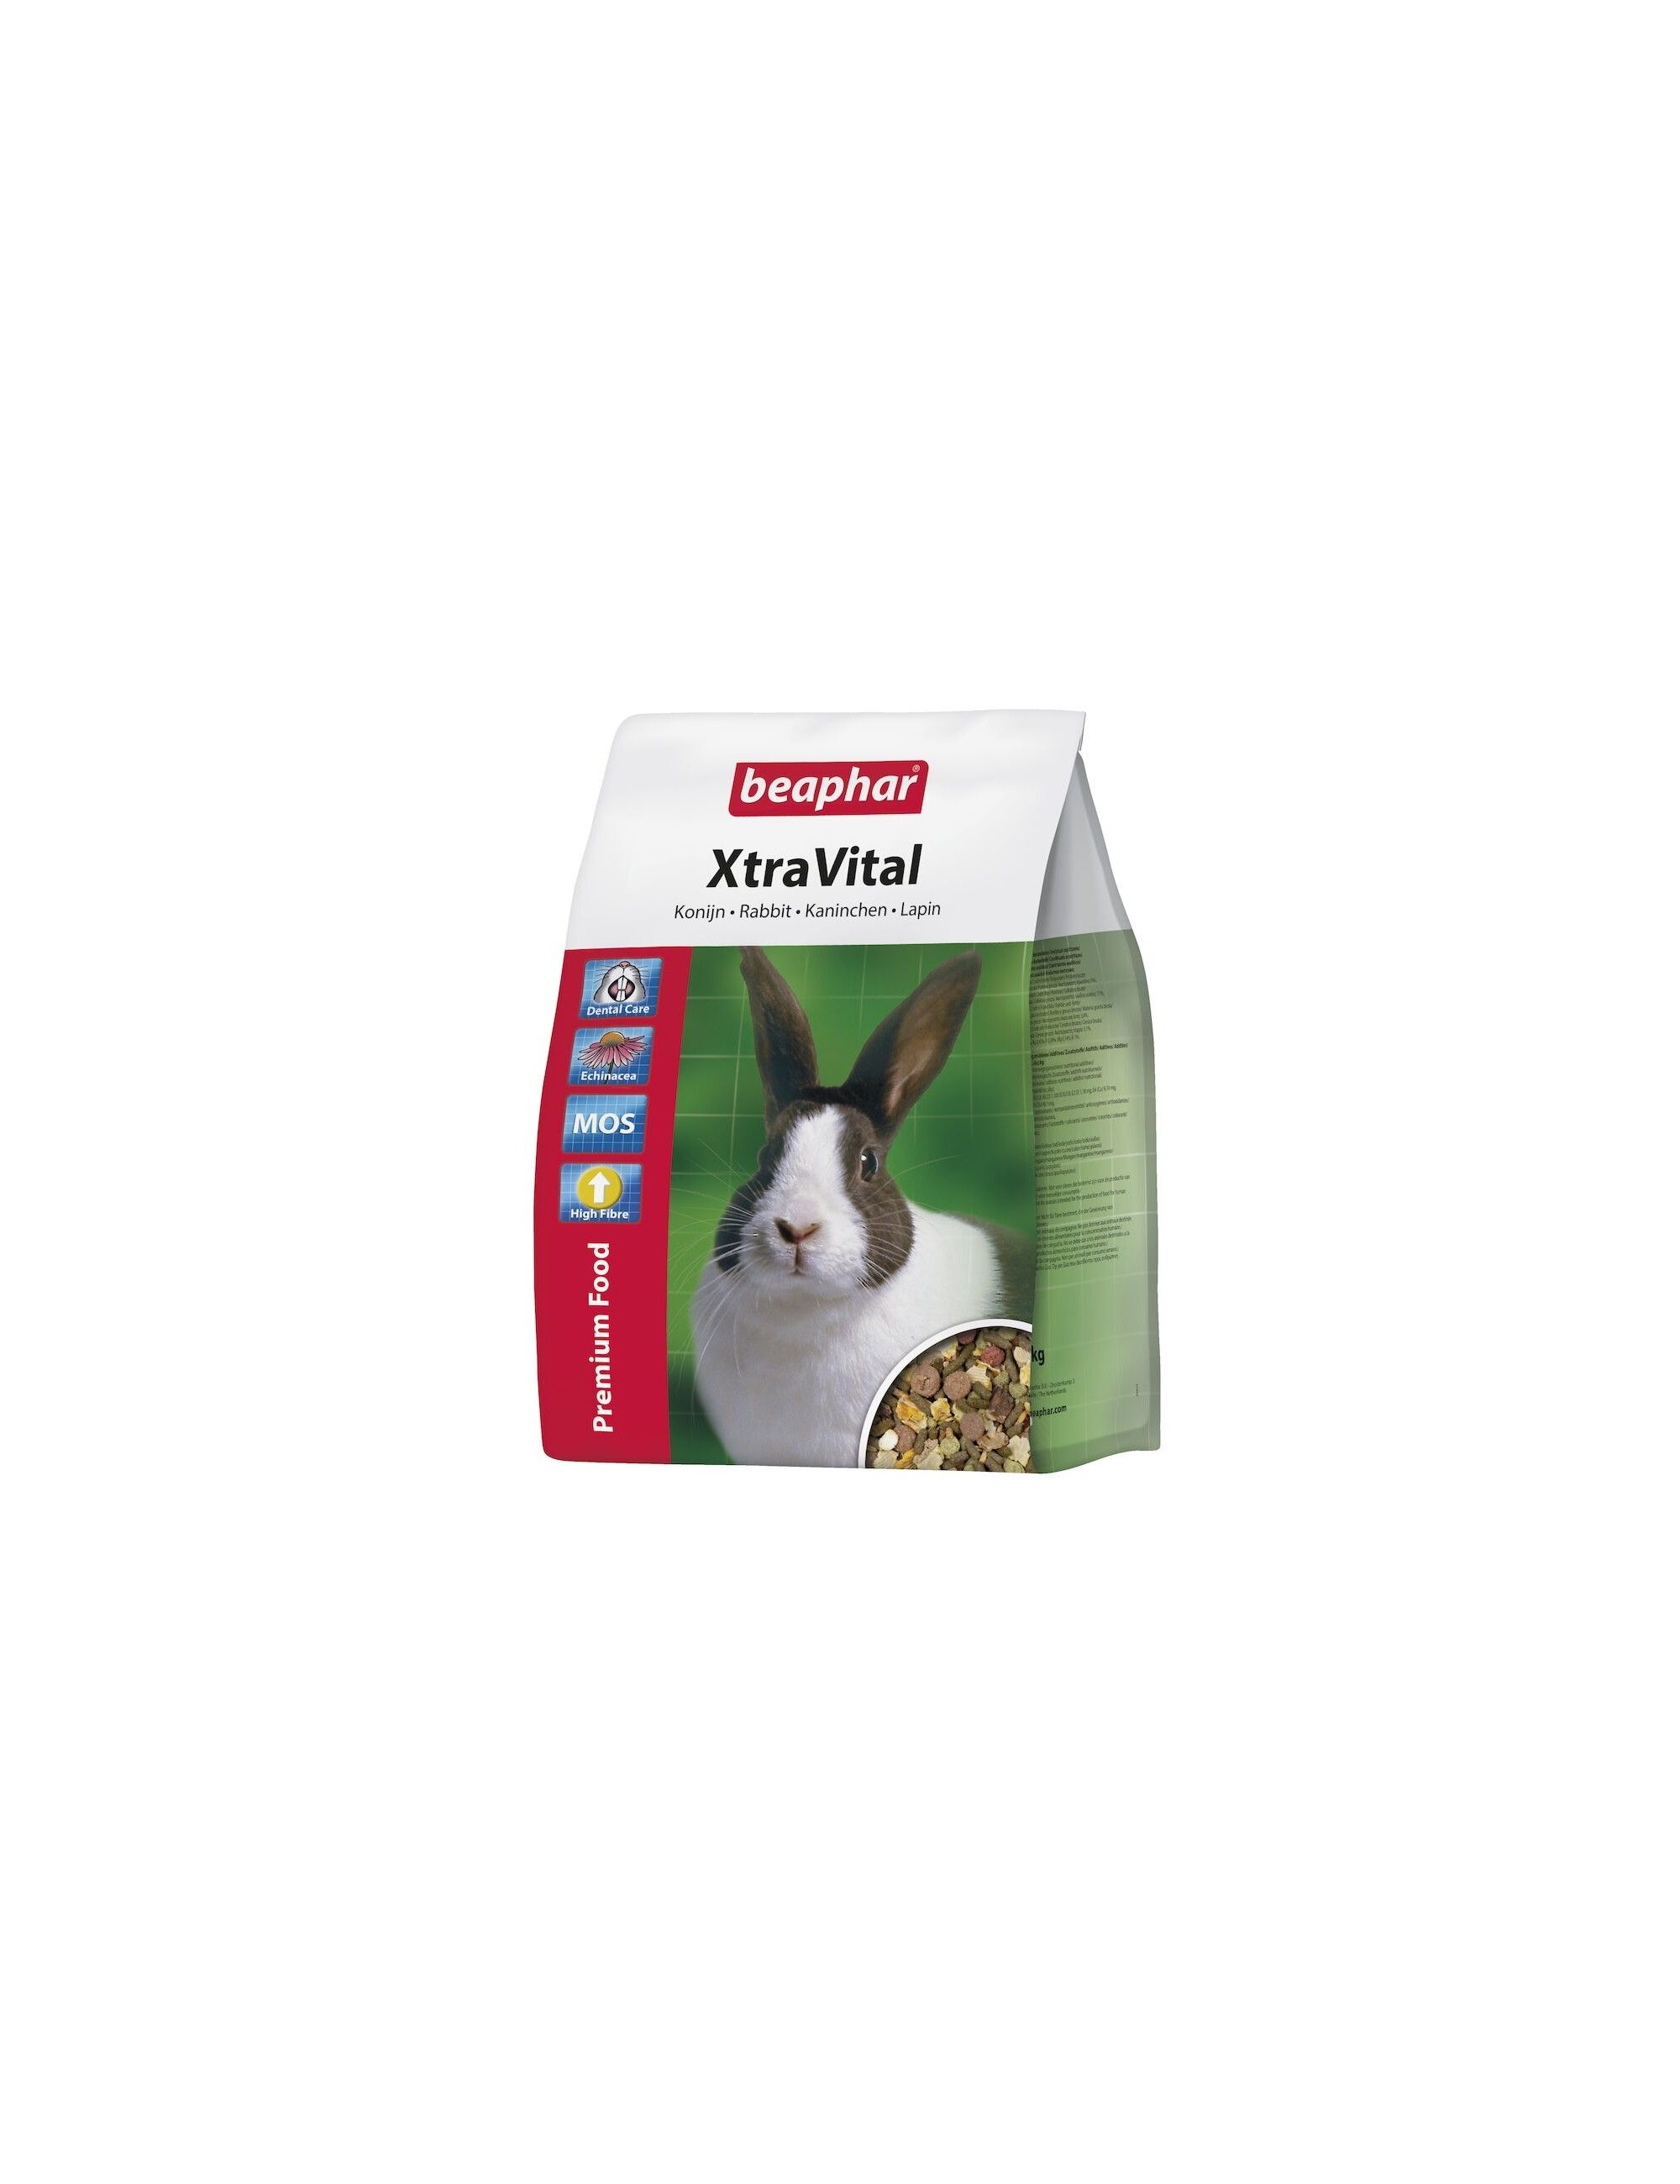 BEAPHAR - XTRAVITAL Rabbit 2.5kg